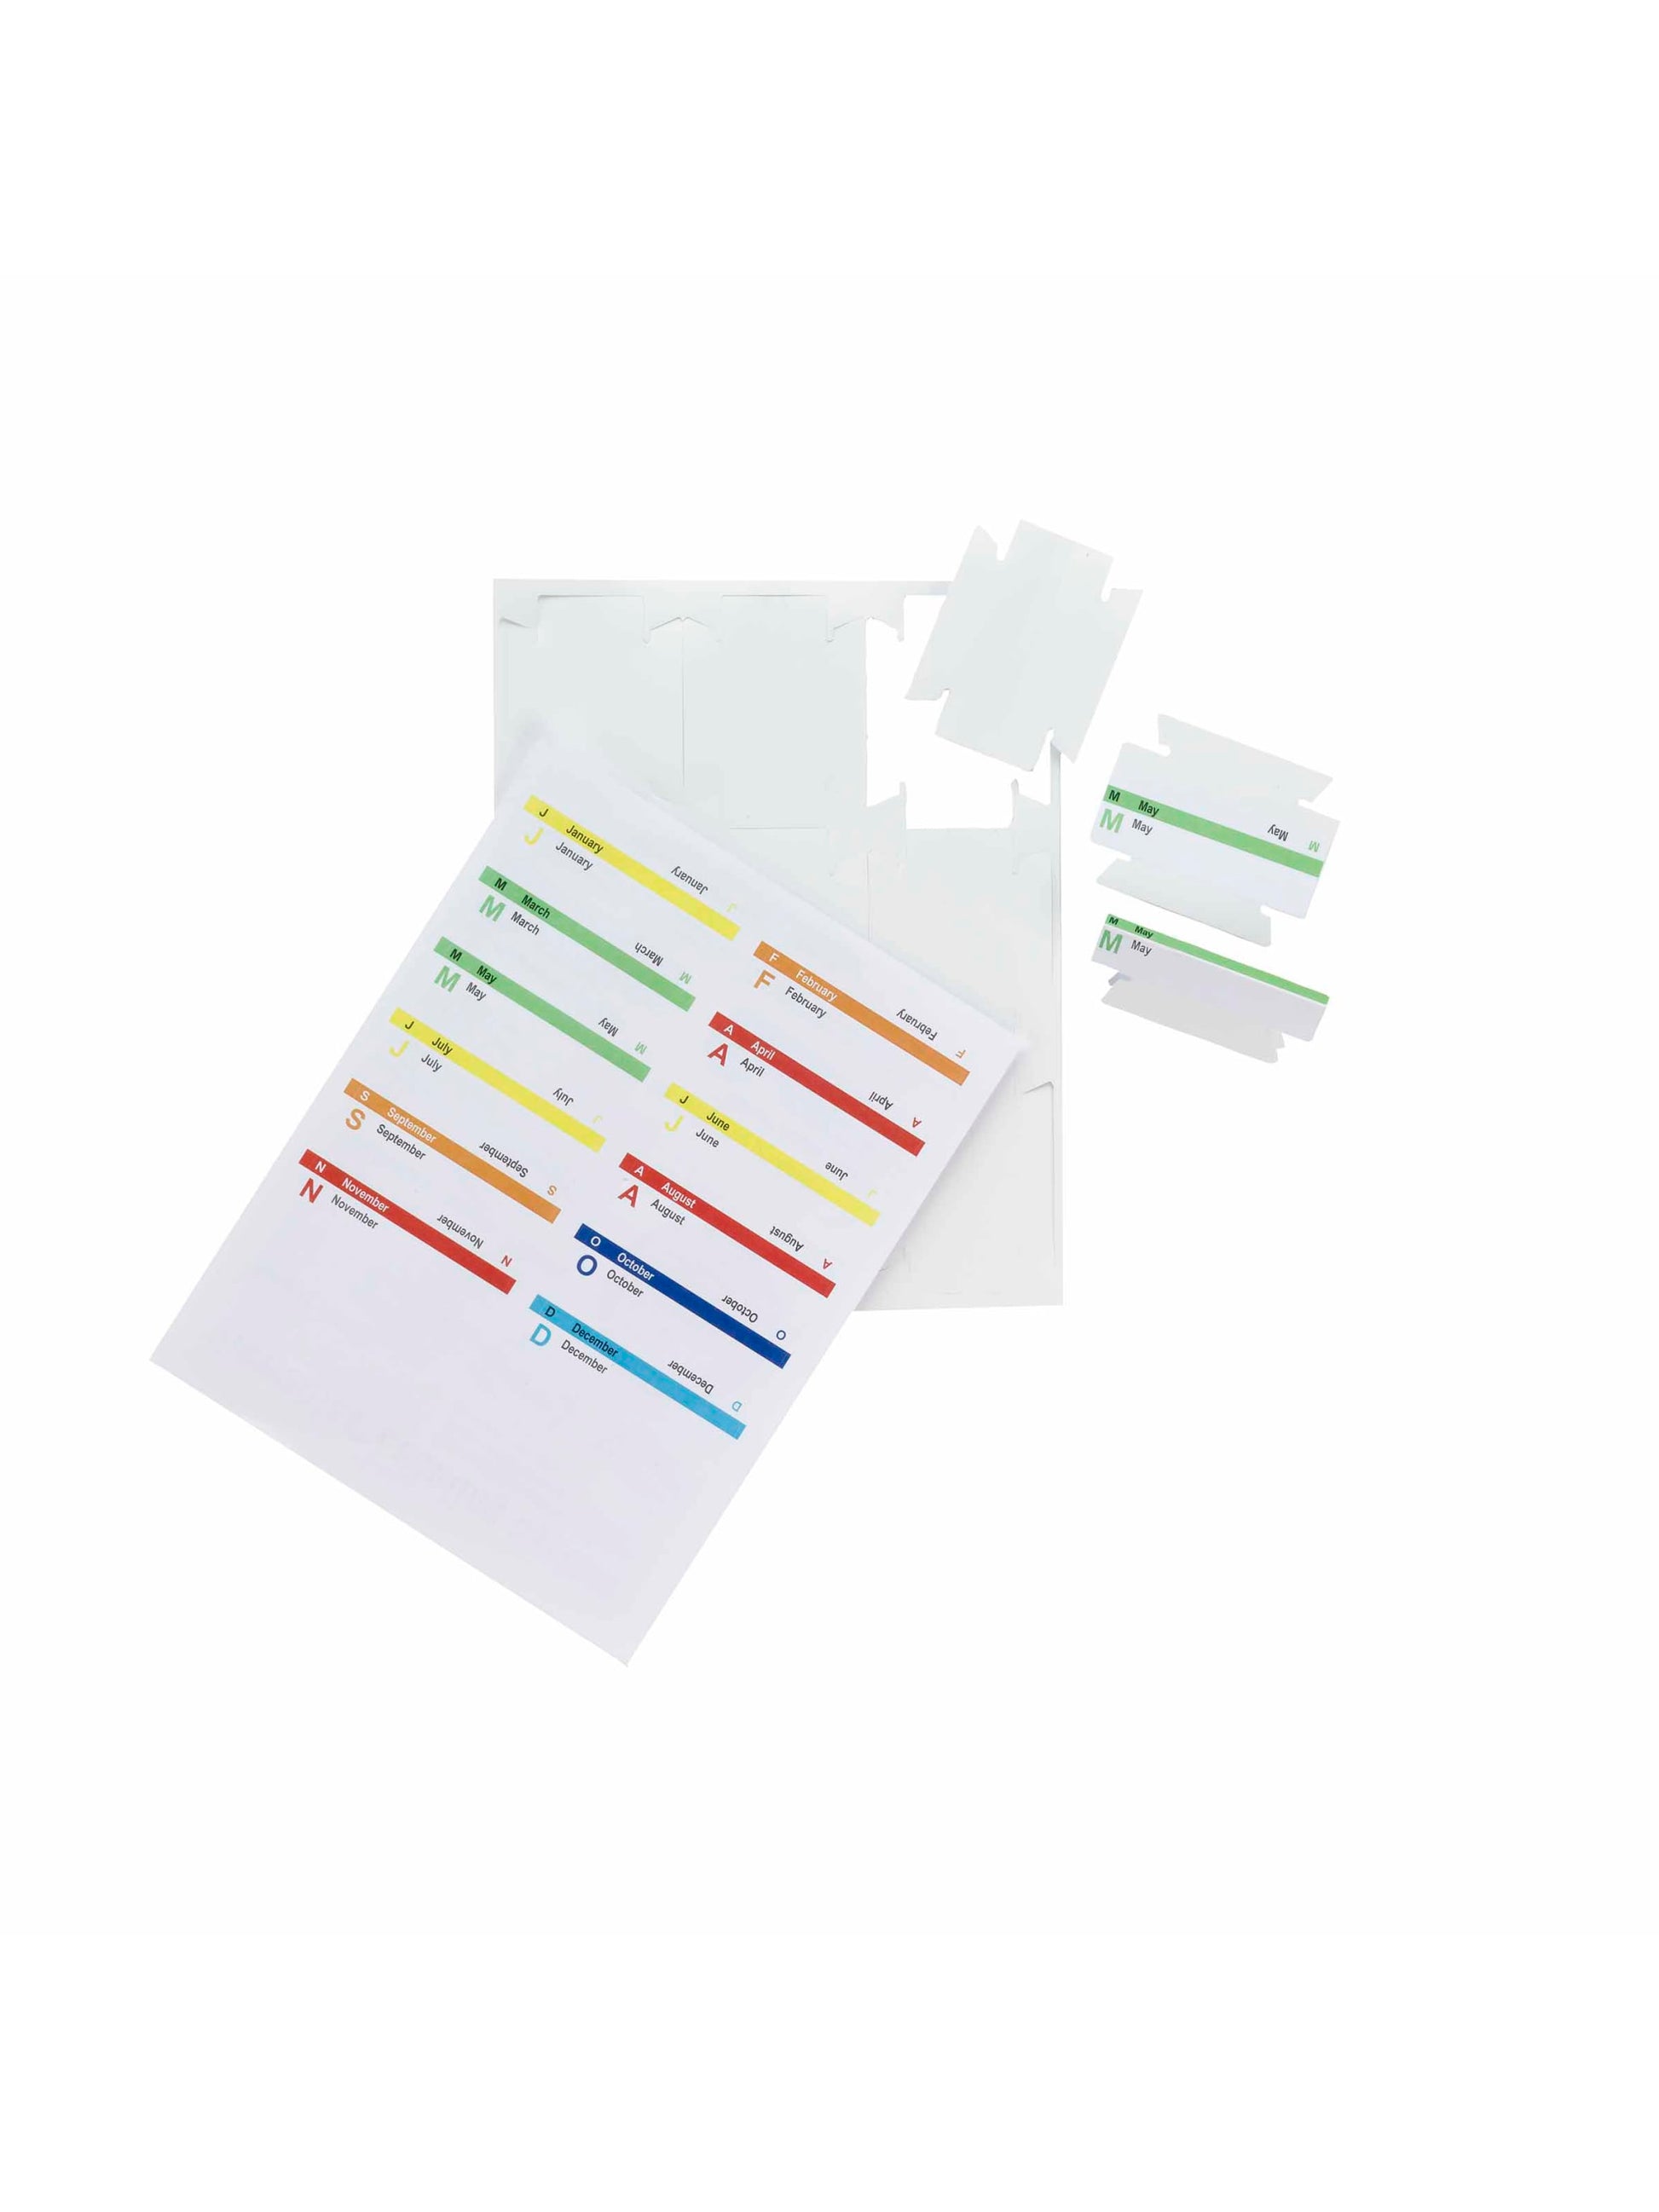 Viewables® Quick-Fold Hanging File Folder Label Kit, White Color, 3-1/2W X 1-1/4H Size, Set of 1, 086486649124